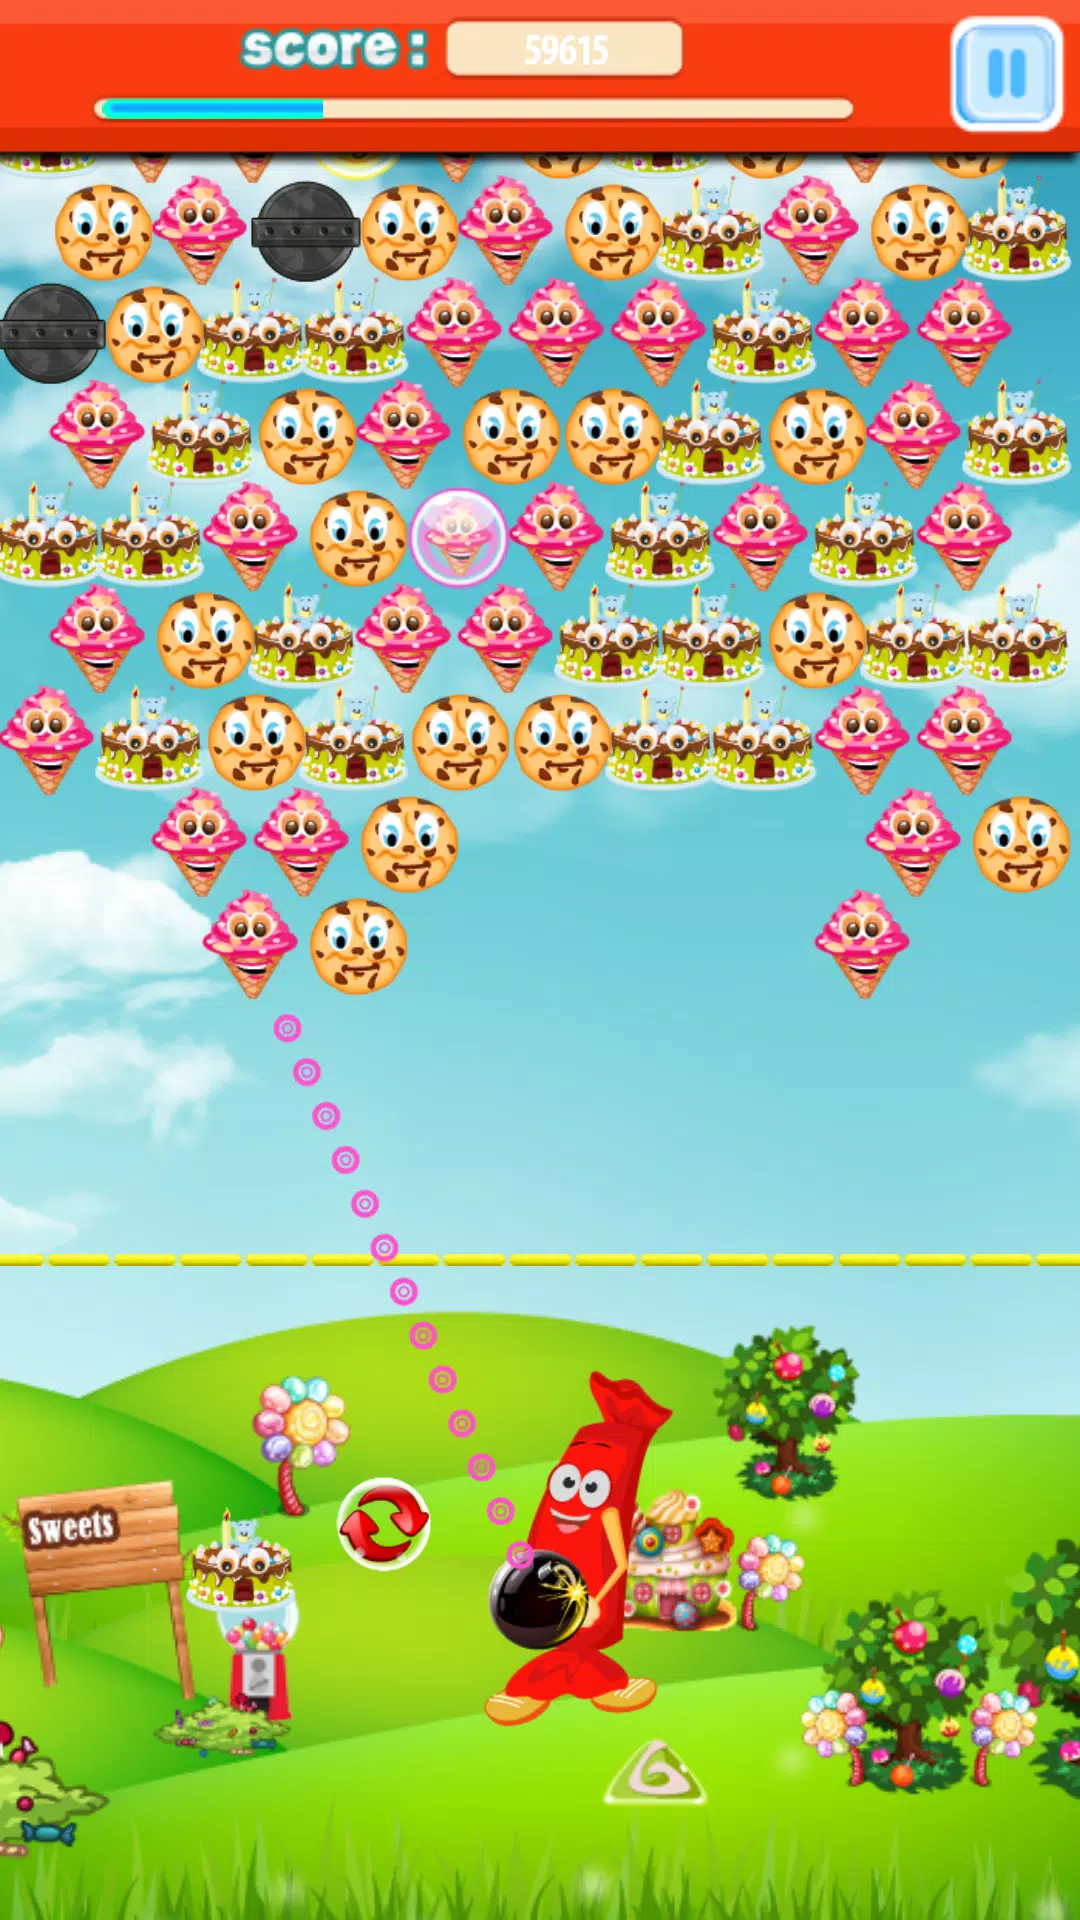 Bubble Shooter Candy em Jogos na Internet